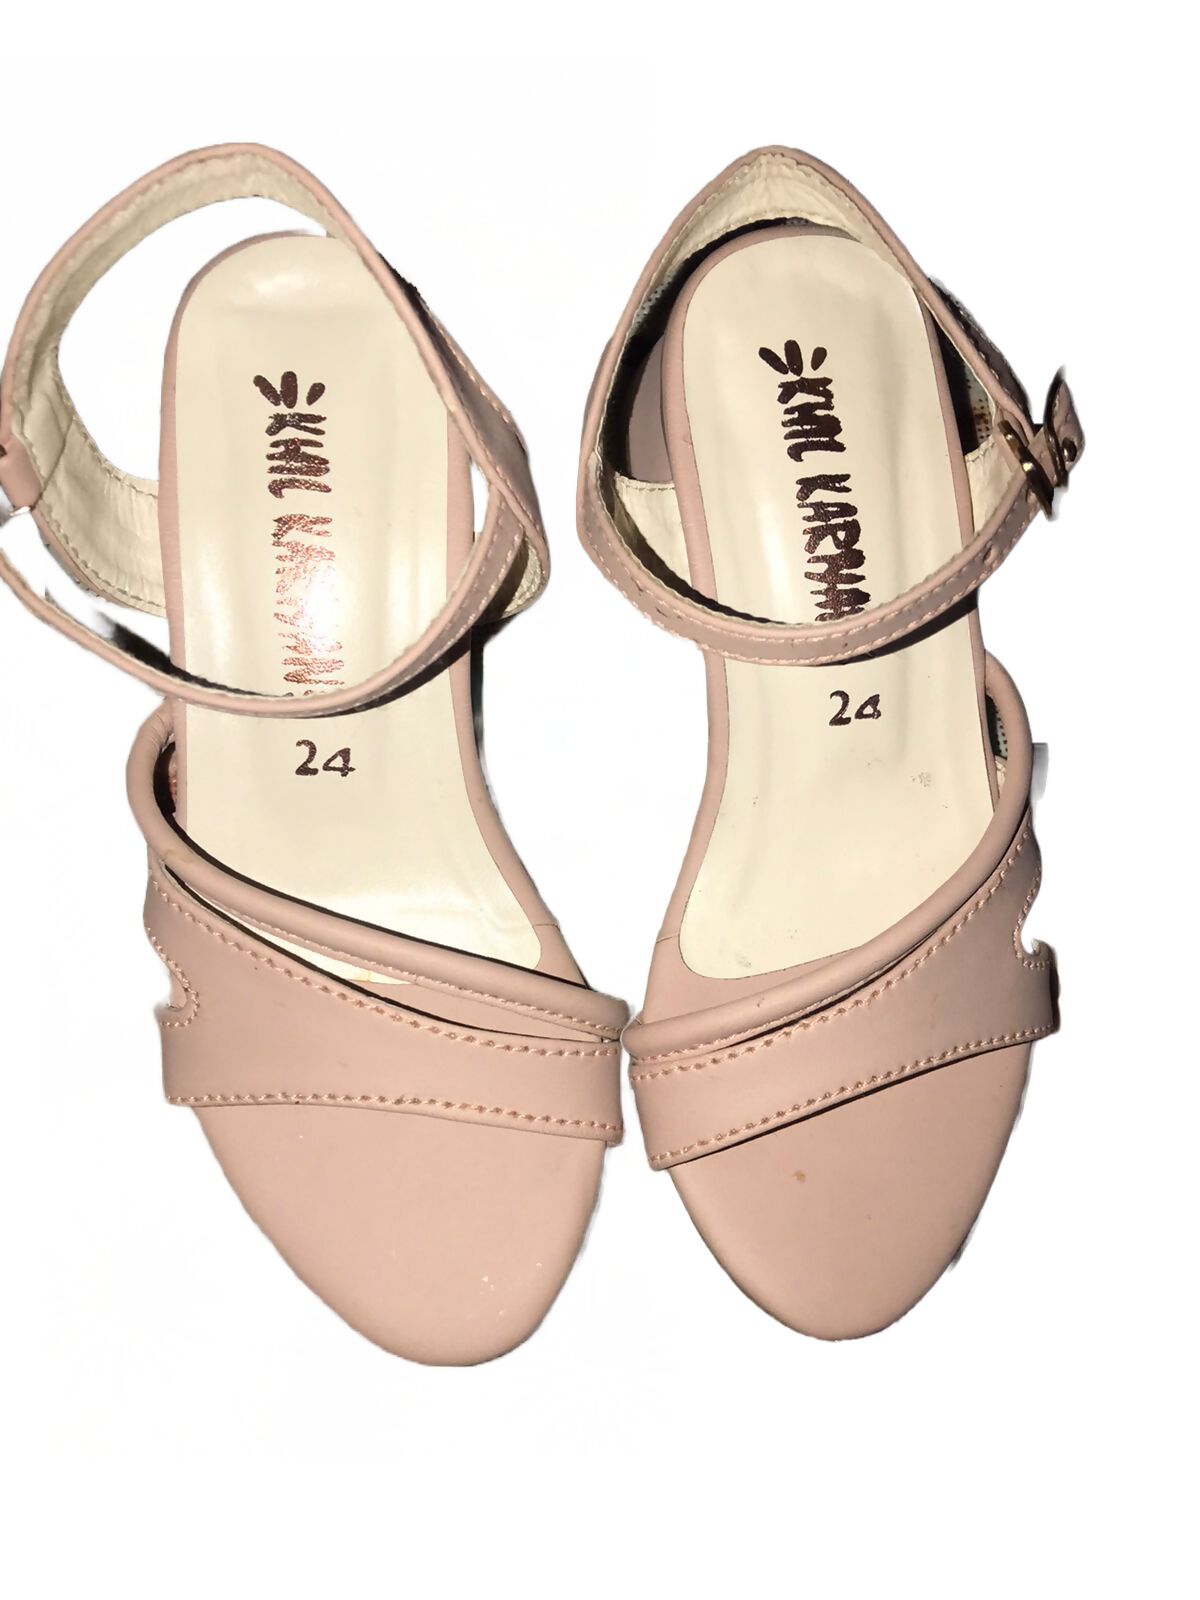 Khil Karhan | Girls Shoes | Size: 24 | New